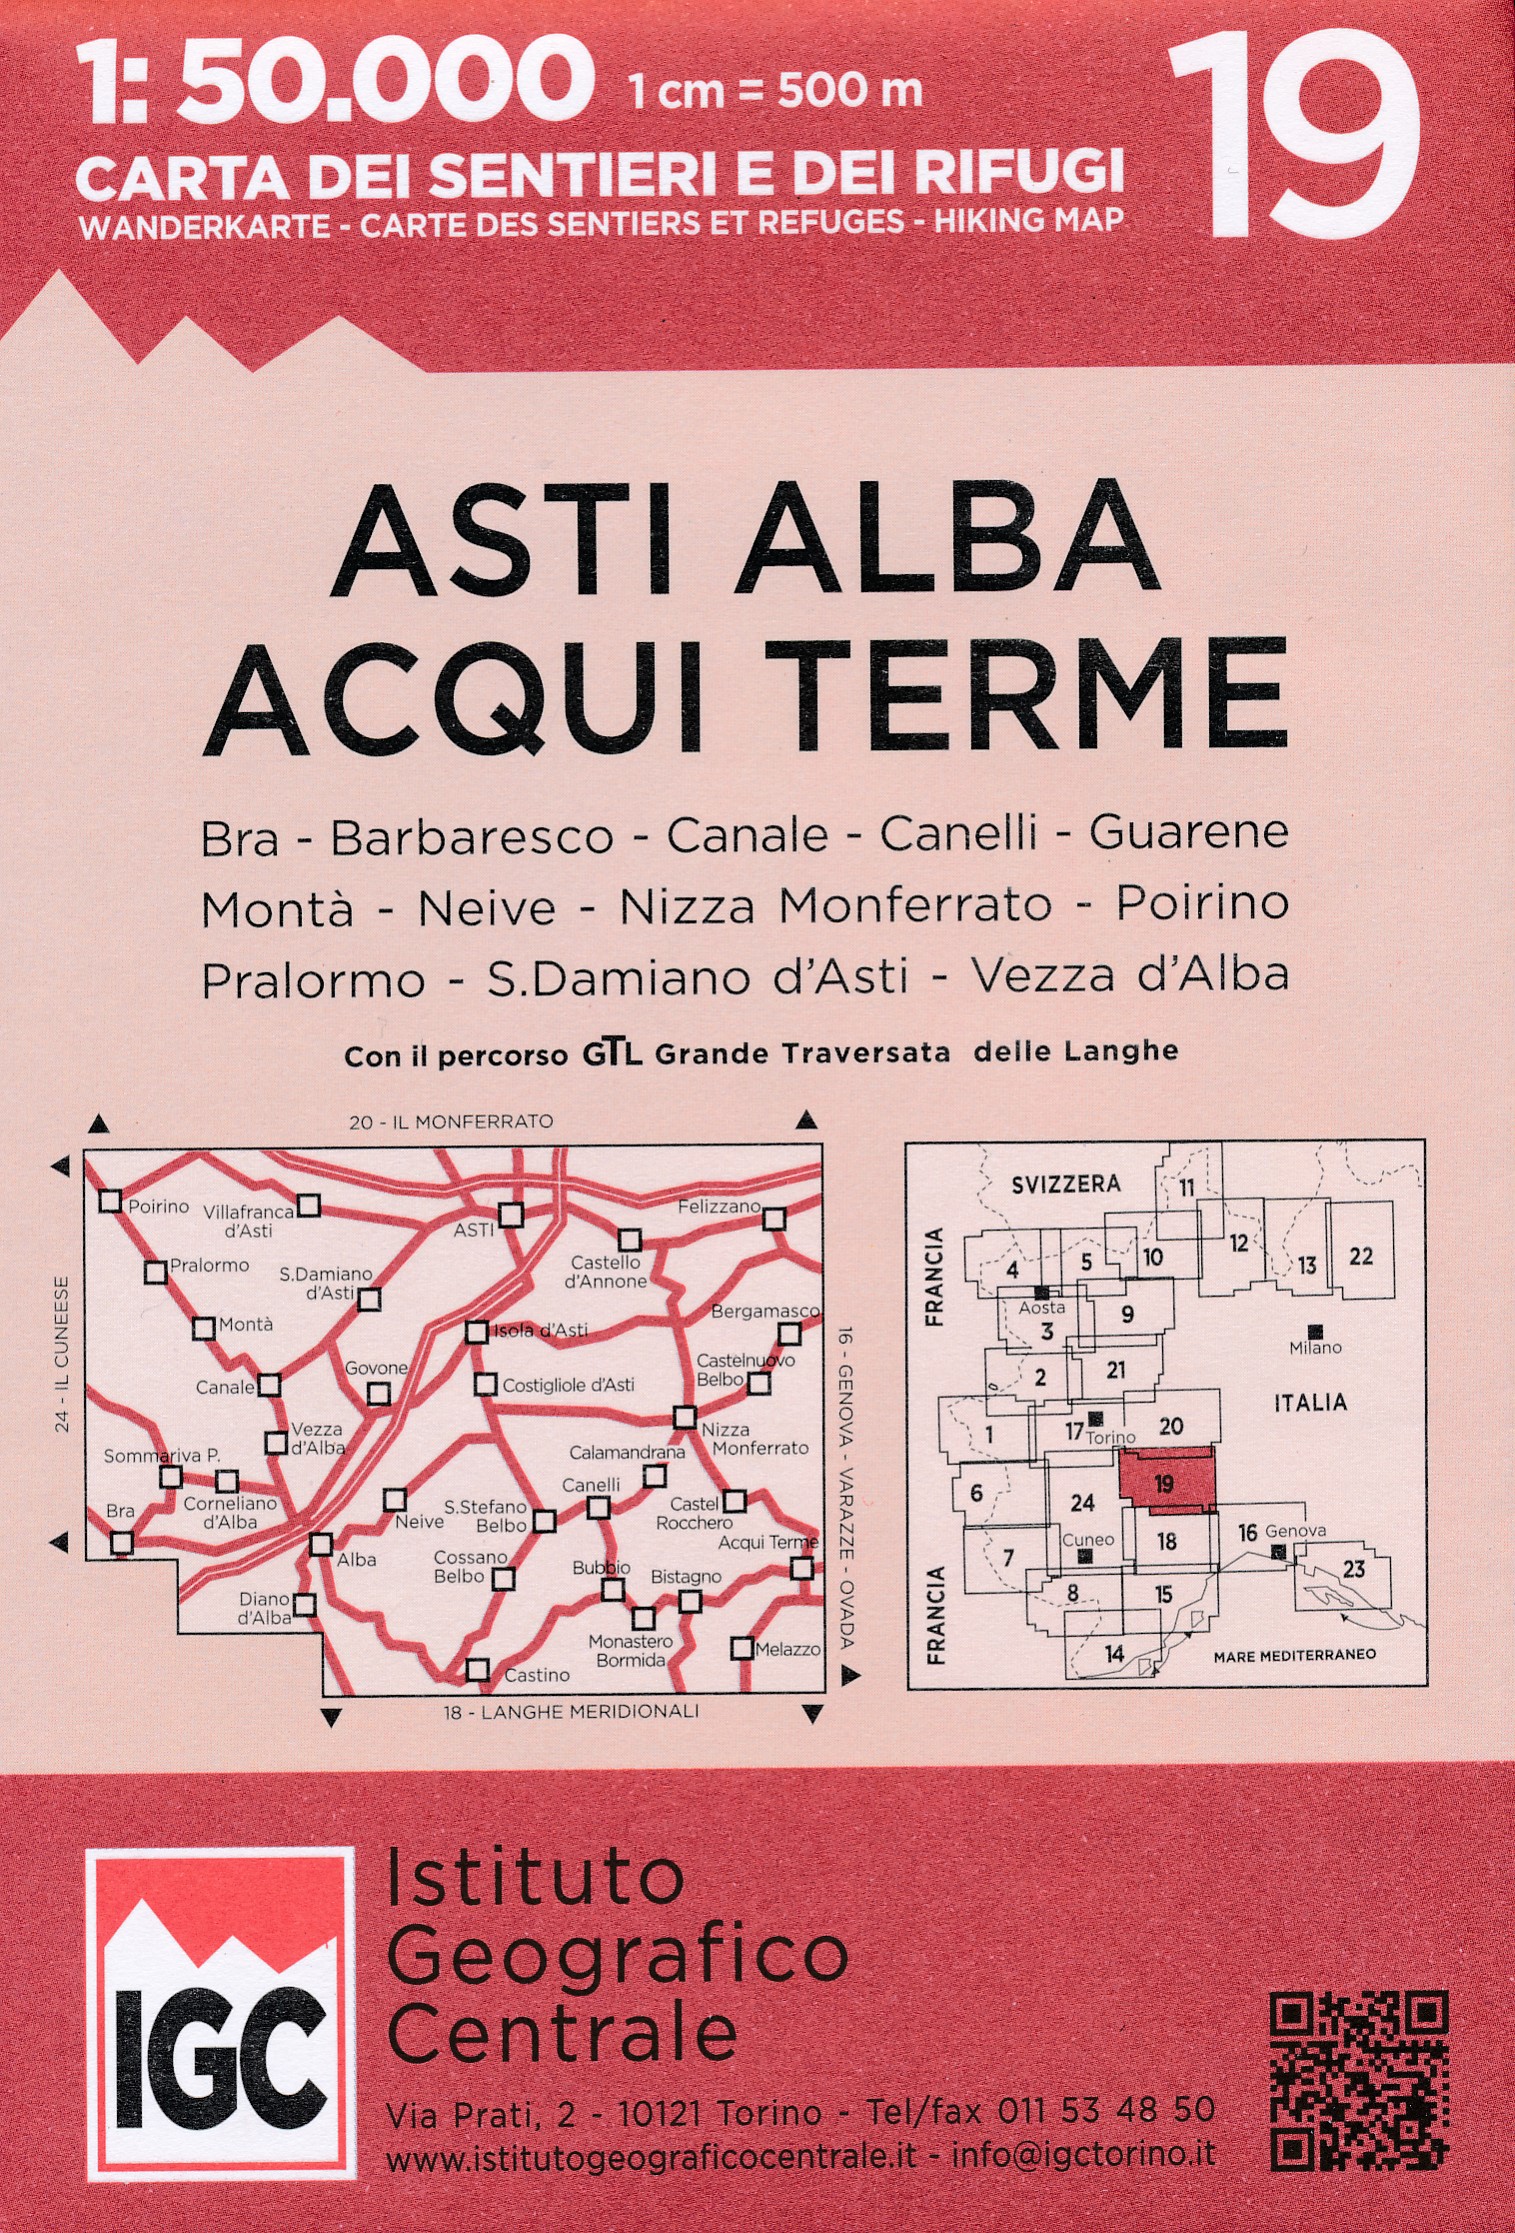 Online bestellen: Wandelkaart 19 Asti, Alba, Acqui terme | IGC - Istituto Geografico Centrale